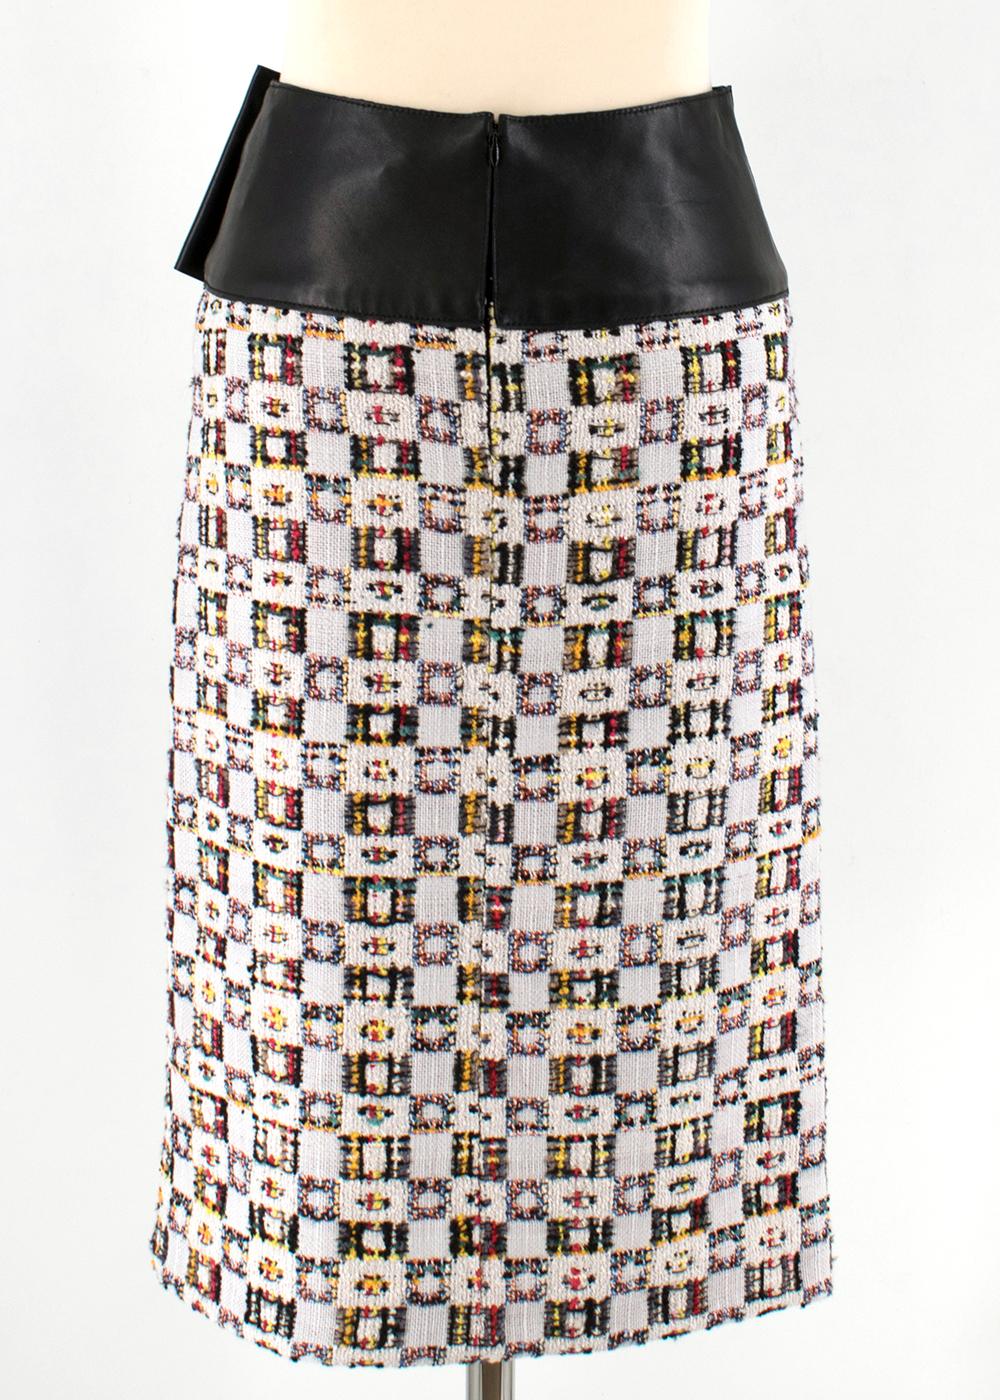 Black Alexander McQueen Leather-Trimmed Tweed Skirt 38